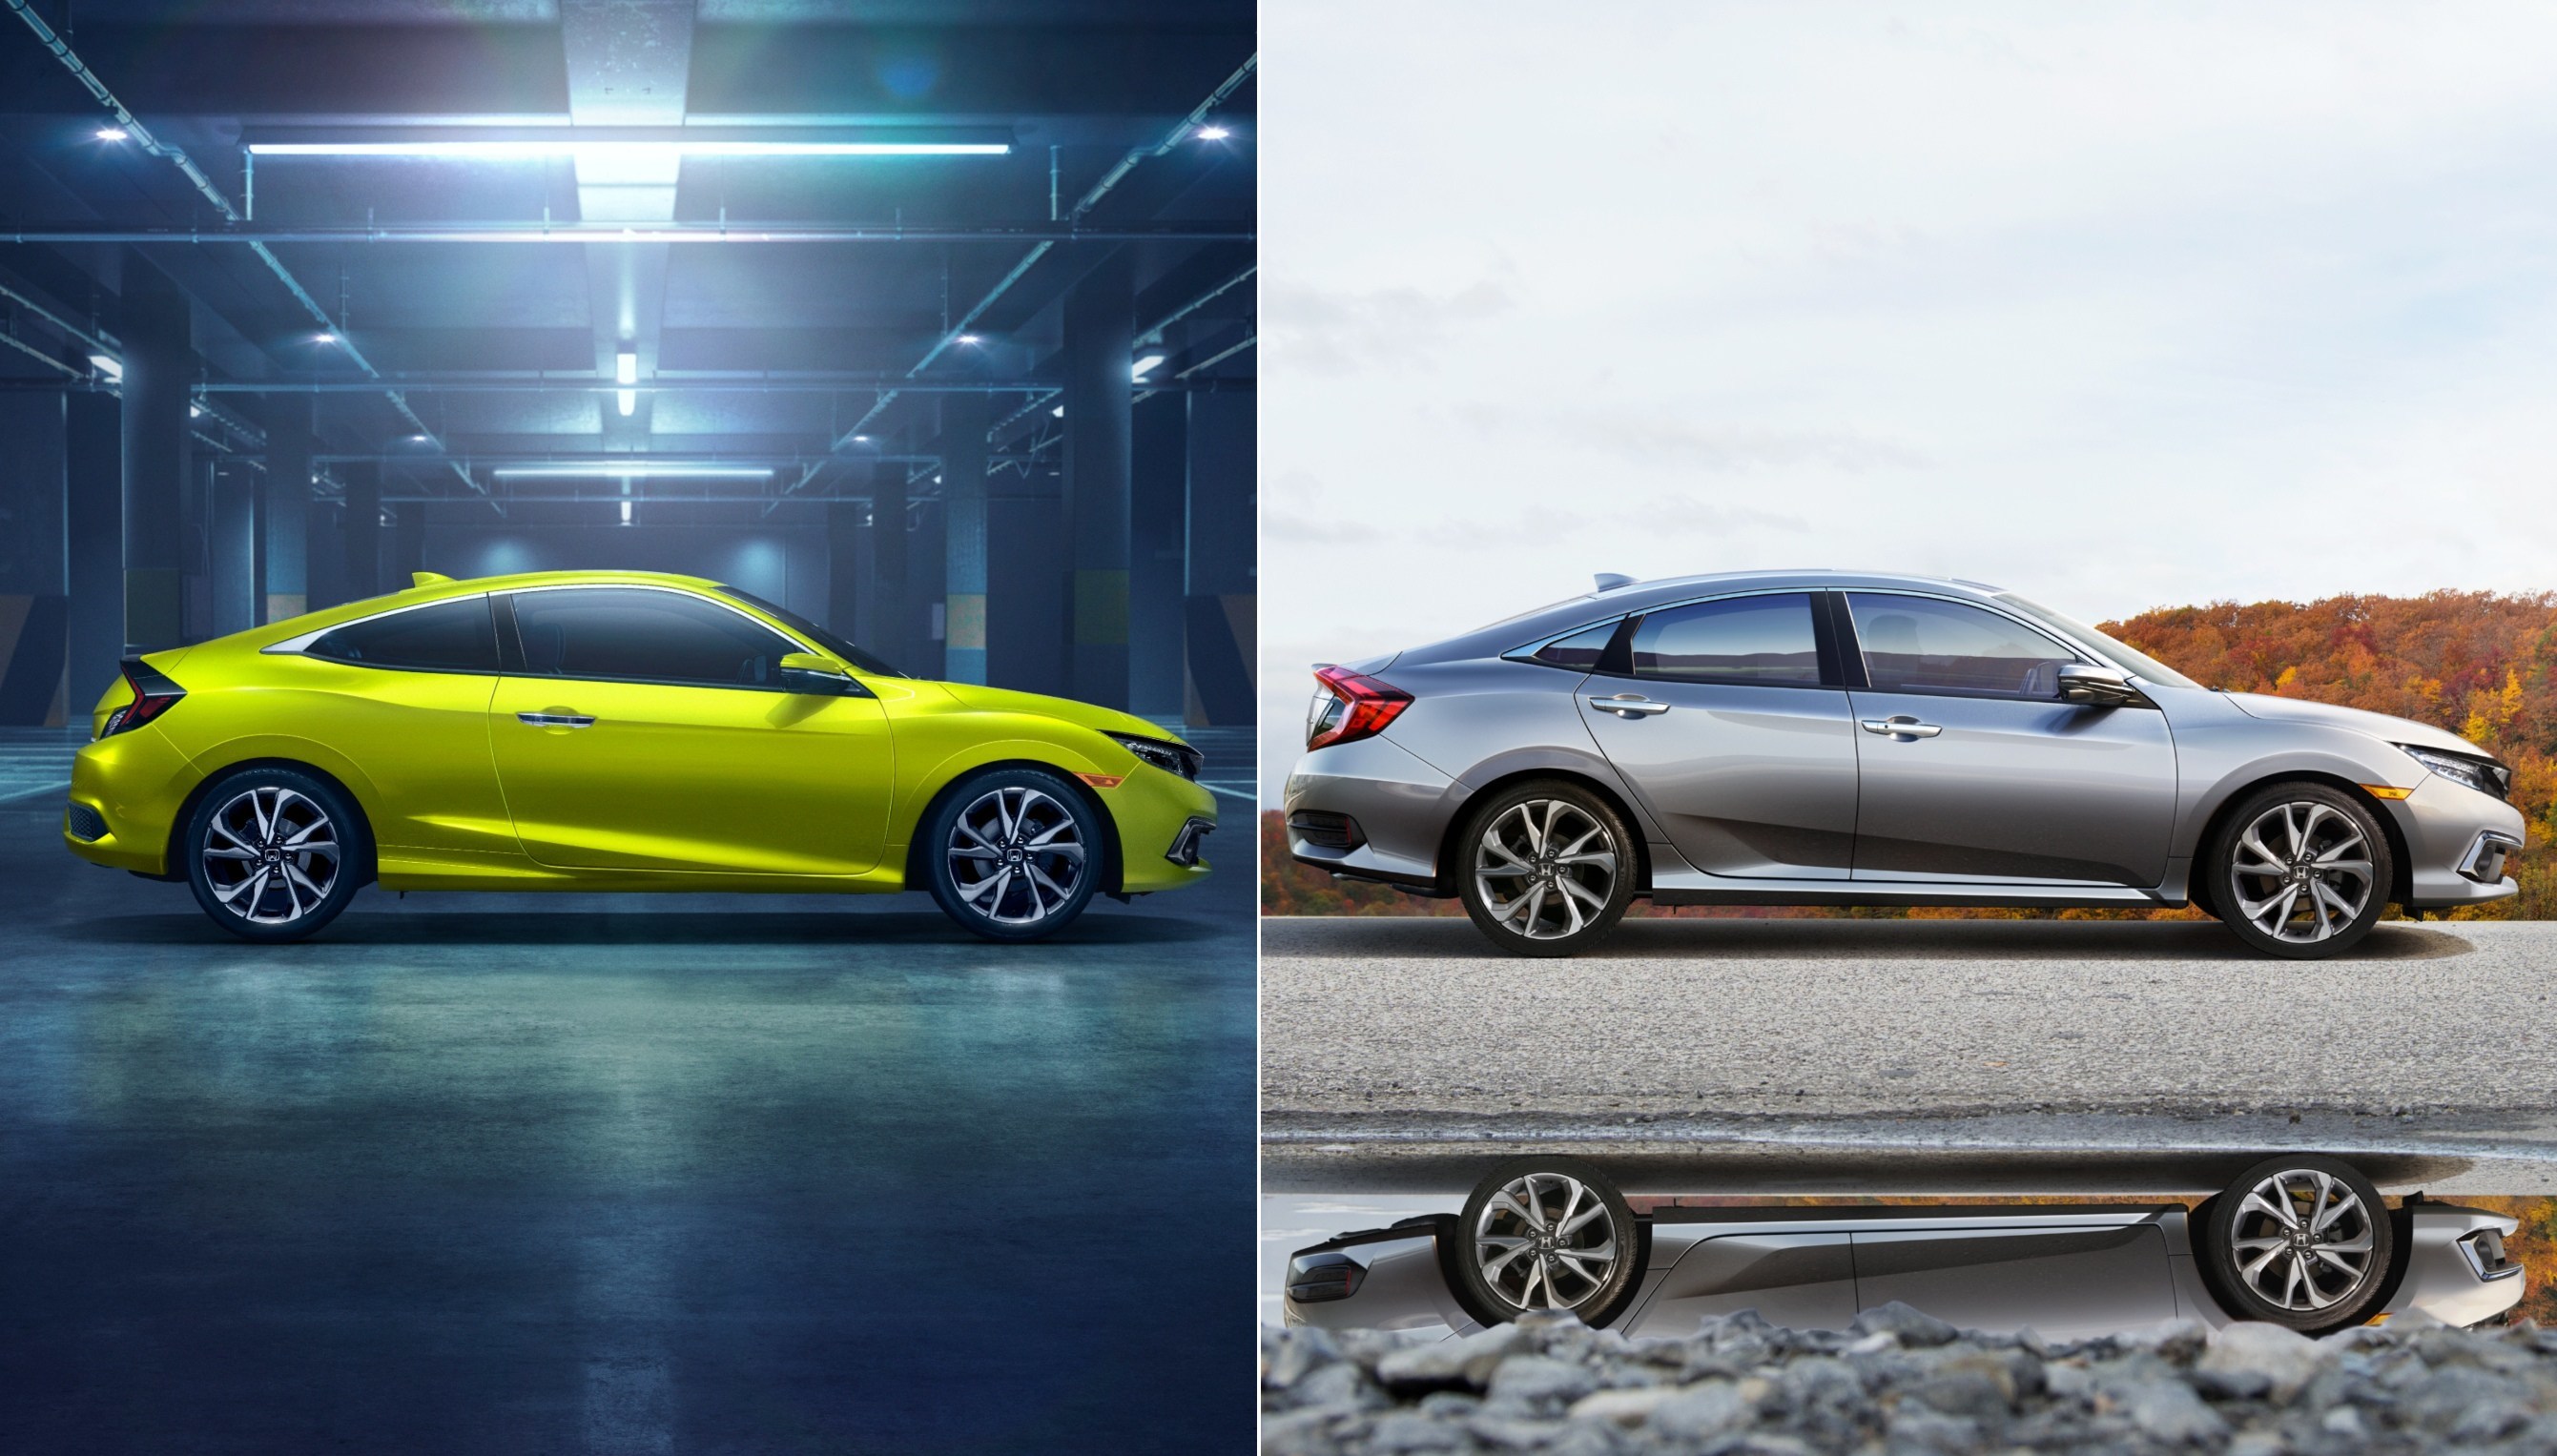 2019 Honda Civic Sedan And Coupe America S Best Selling Nameplate Gains Sport Trim Standard Honda Sensing Exterior And Interior Styling Updates